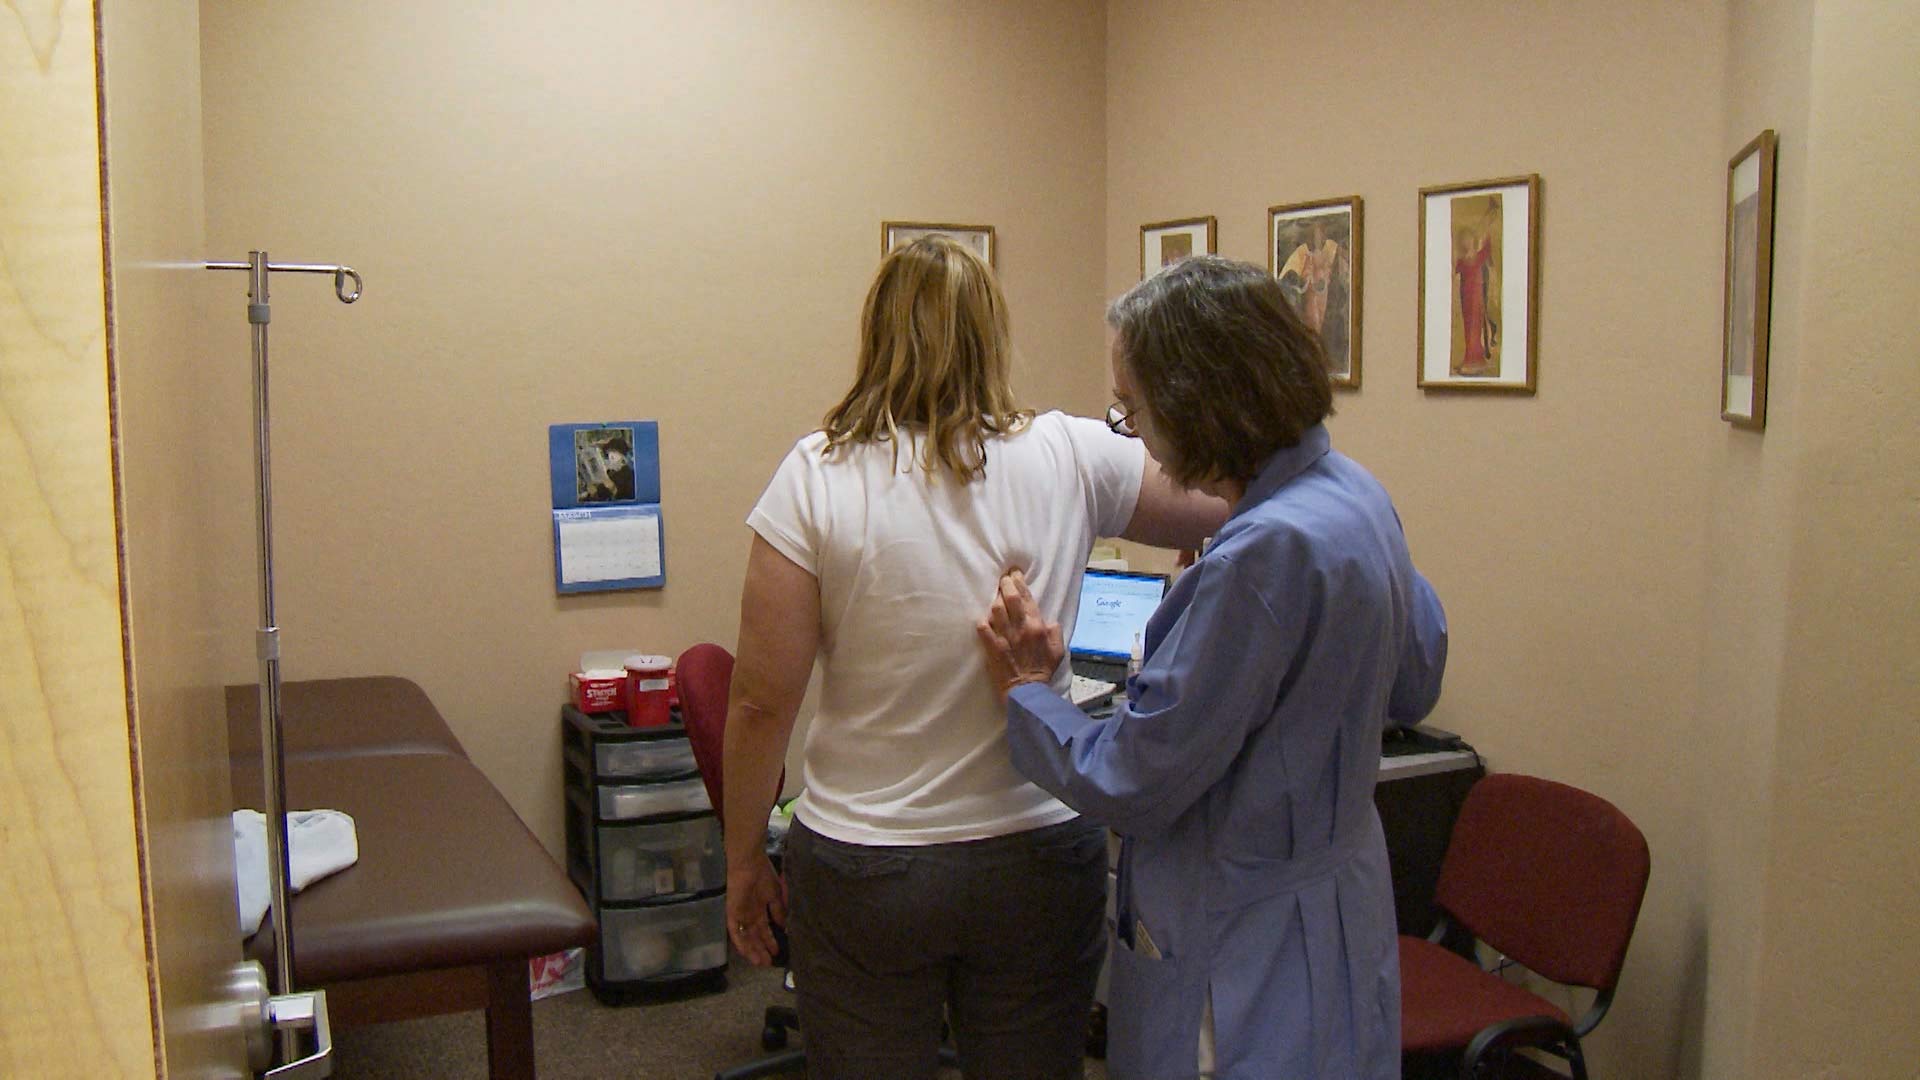 A health professional examines a patient.